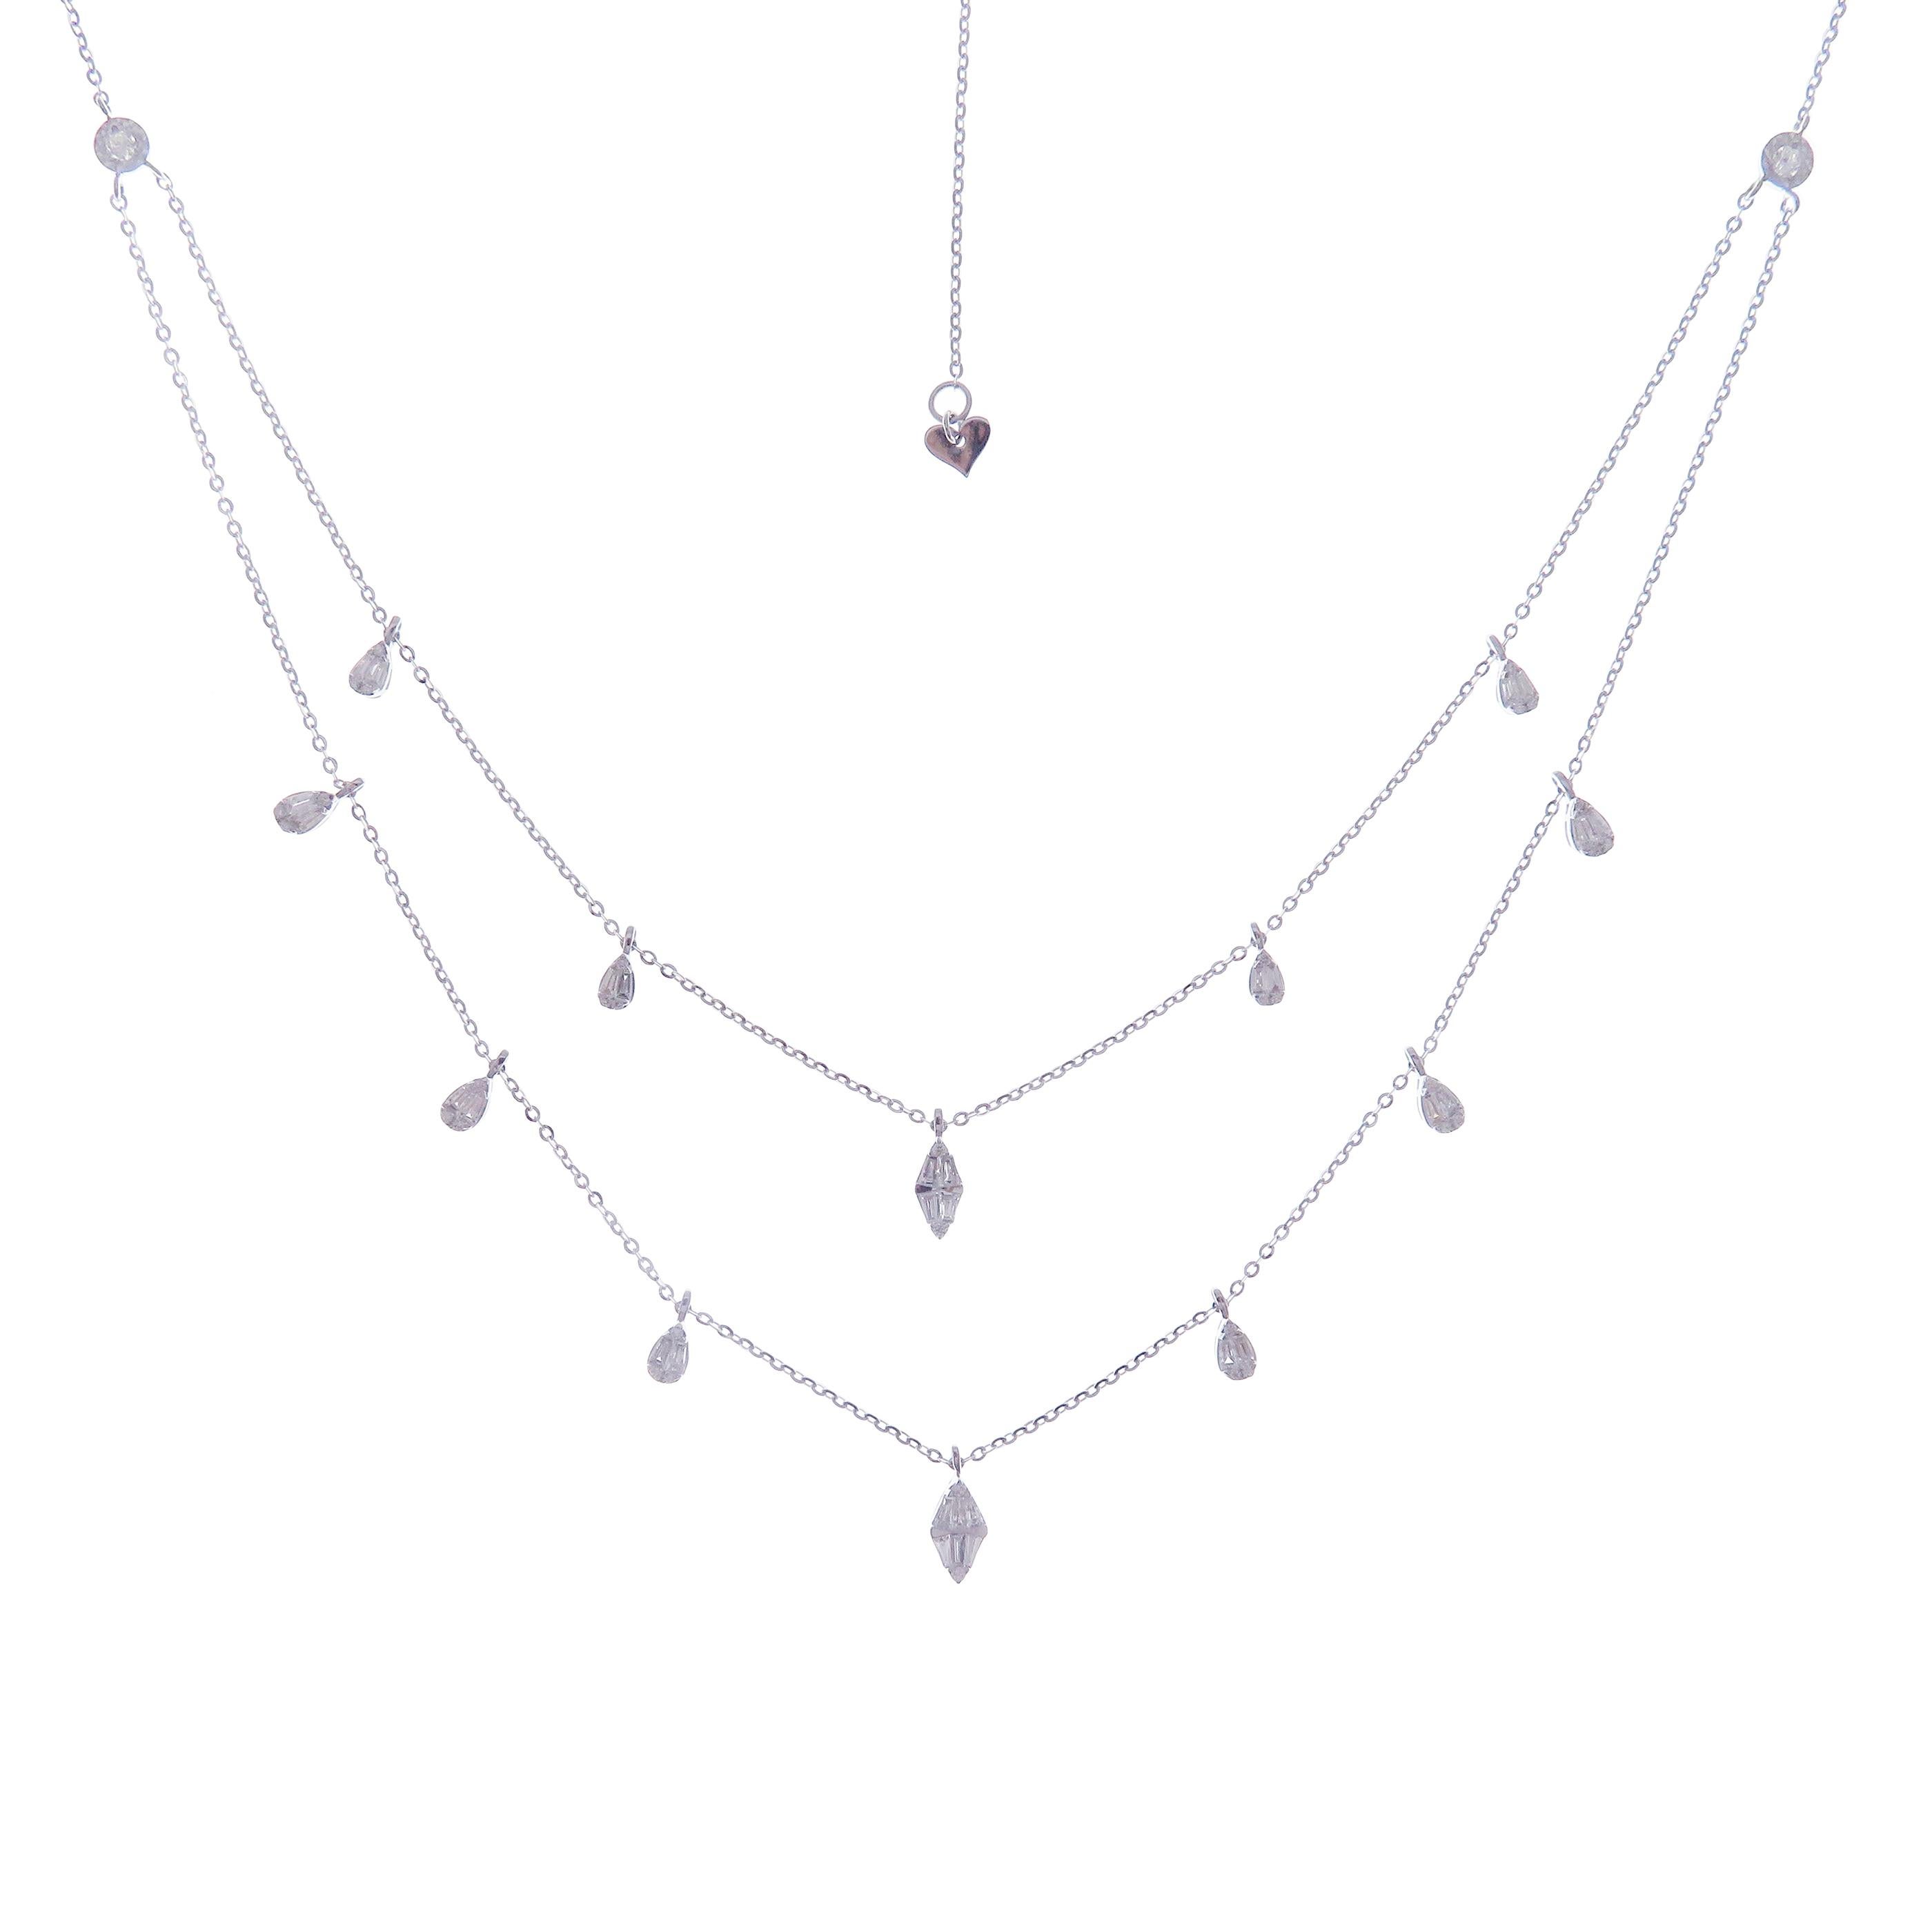 double strand diamond necklace